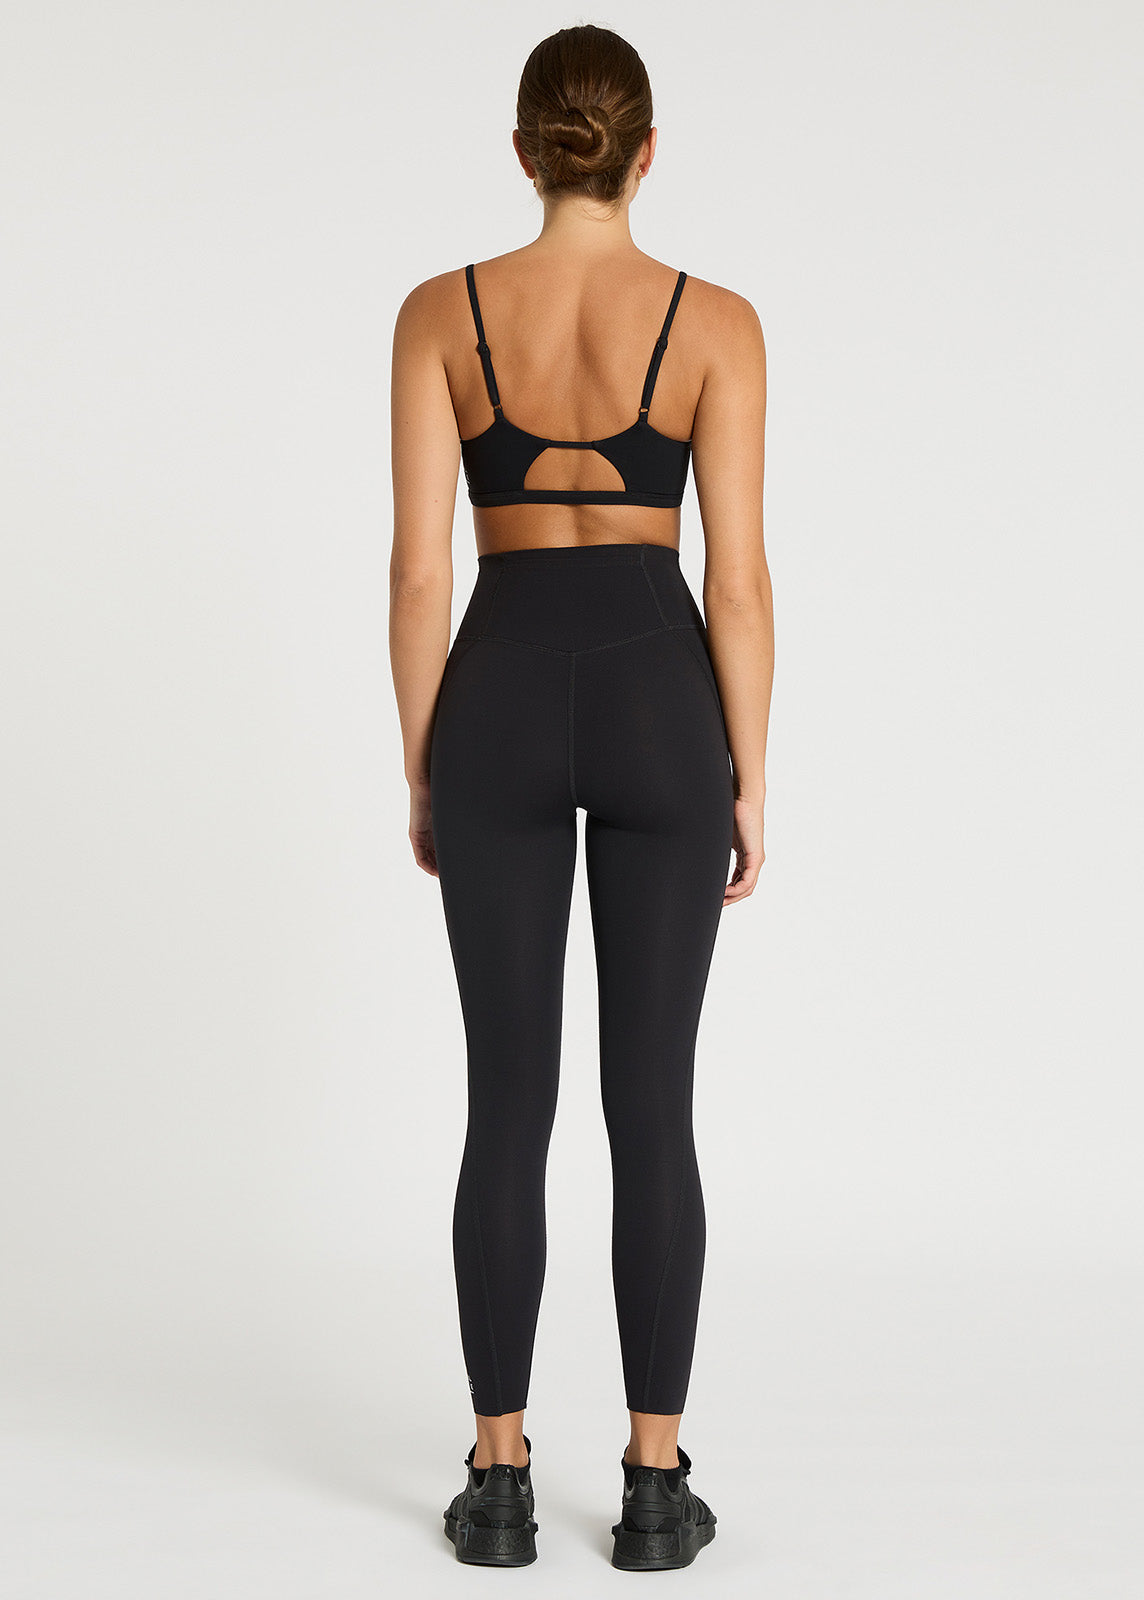 Model stood facing backwards wearing black high rise leggings with hidden pocket detail to the back, 7/8 leg length and white logo detail to the bottom of leg.